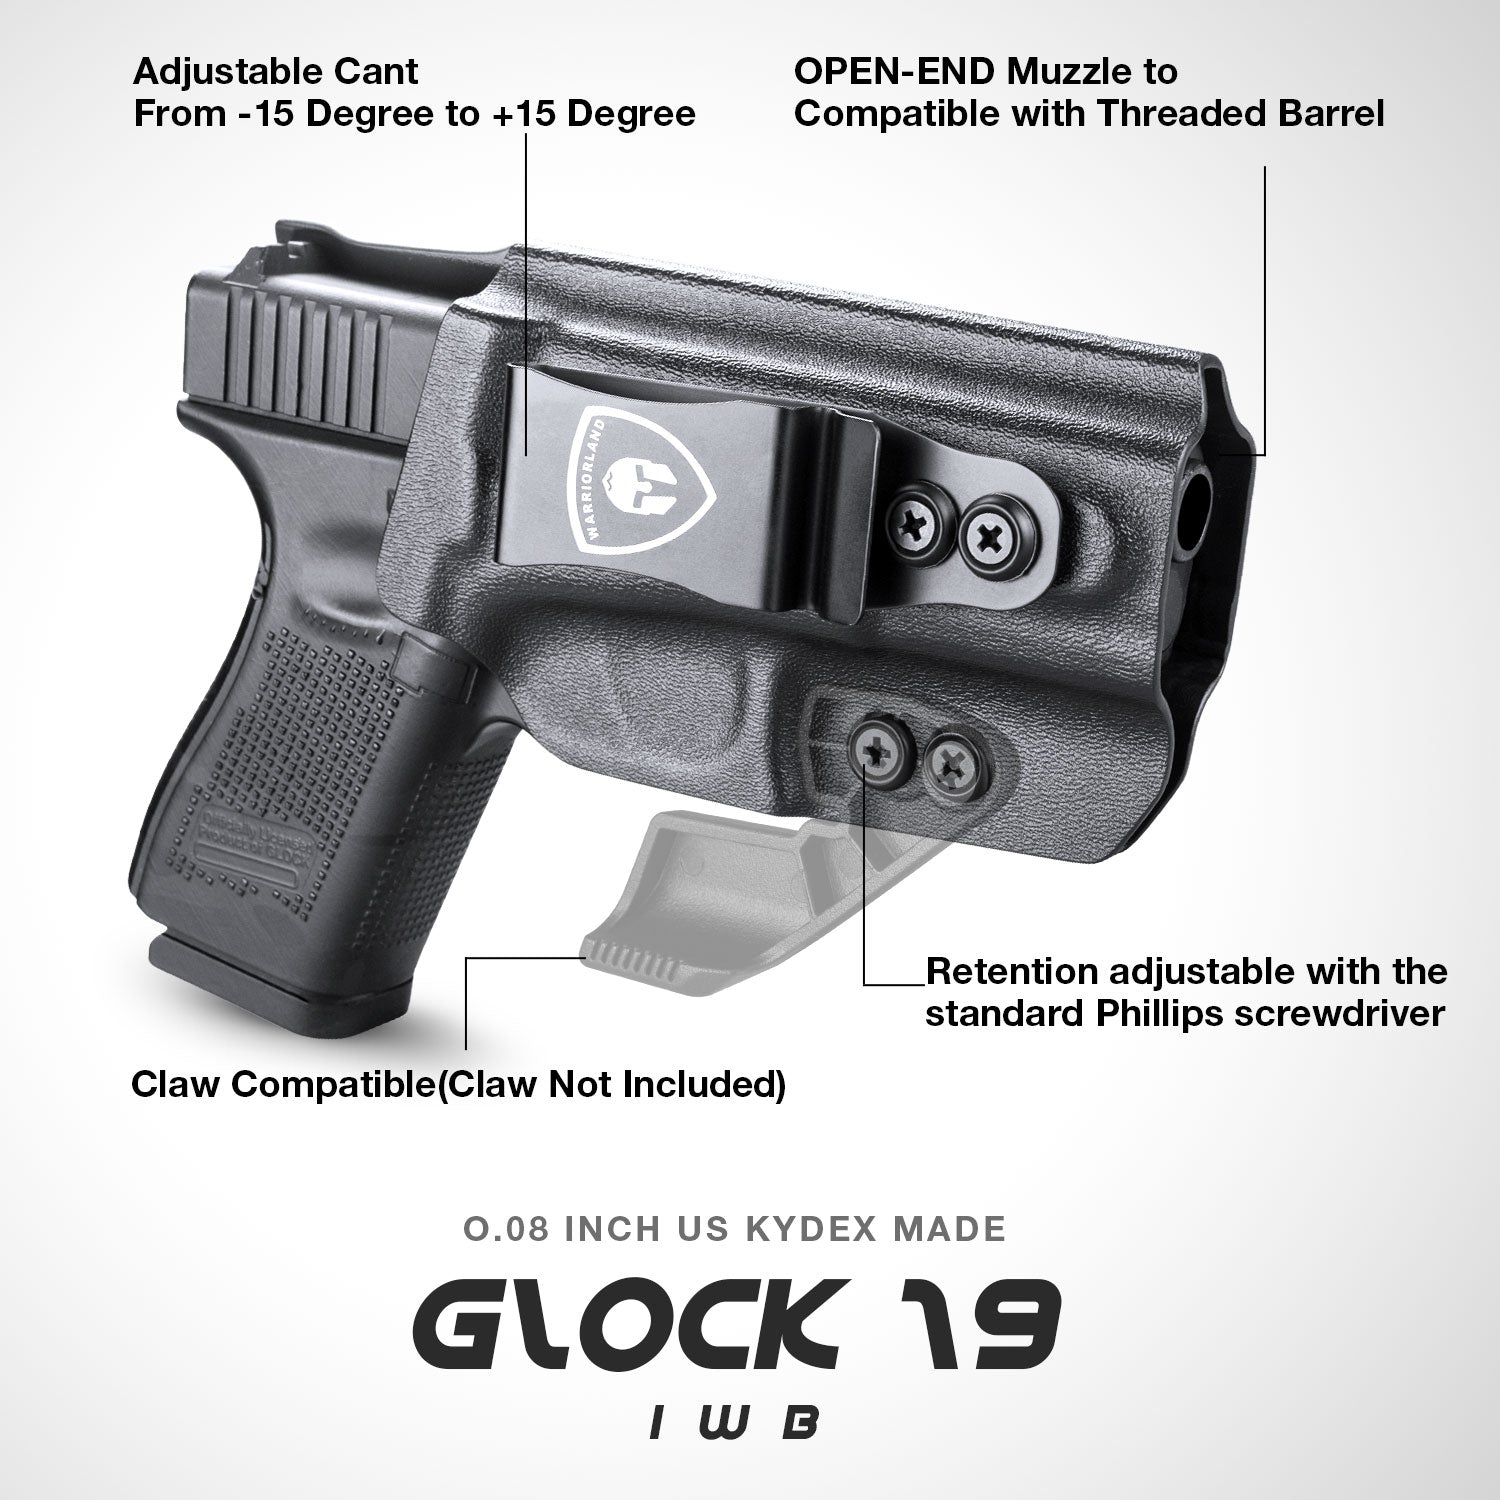 IWB Glock 17 19 23 26 32 Gen 4 5 19X 44 45 Holster Adjustable Ride Height Metal Belt Clip | WARRIORLAND